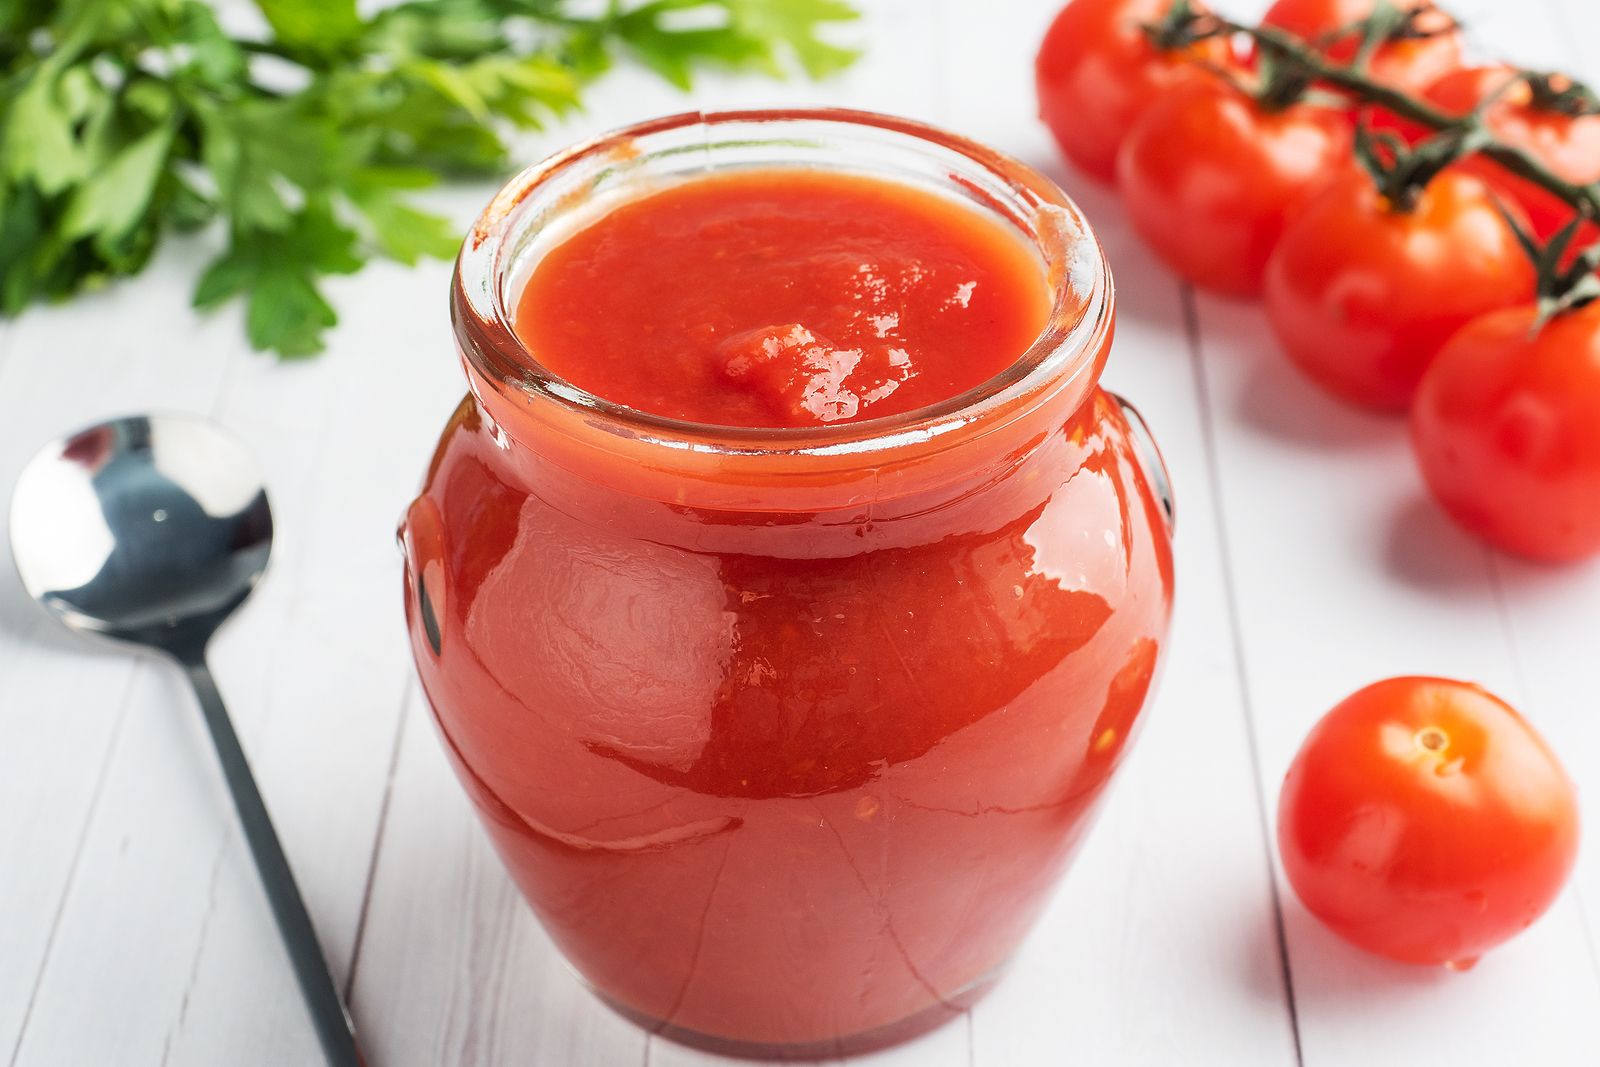 Tomate frito, triturado o salsa de tomate: ¿cuál elegir?